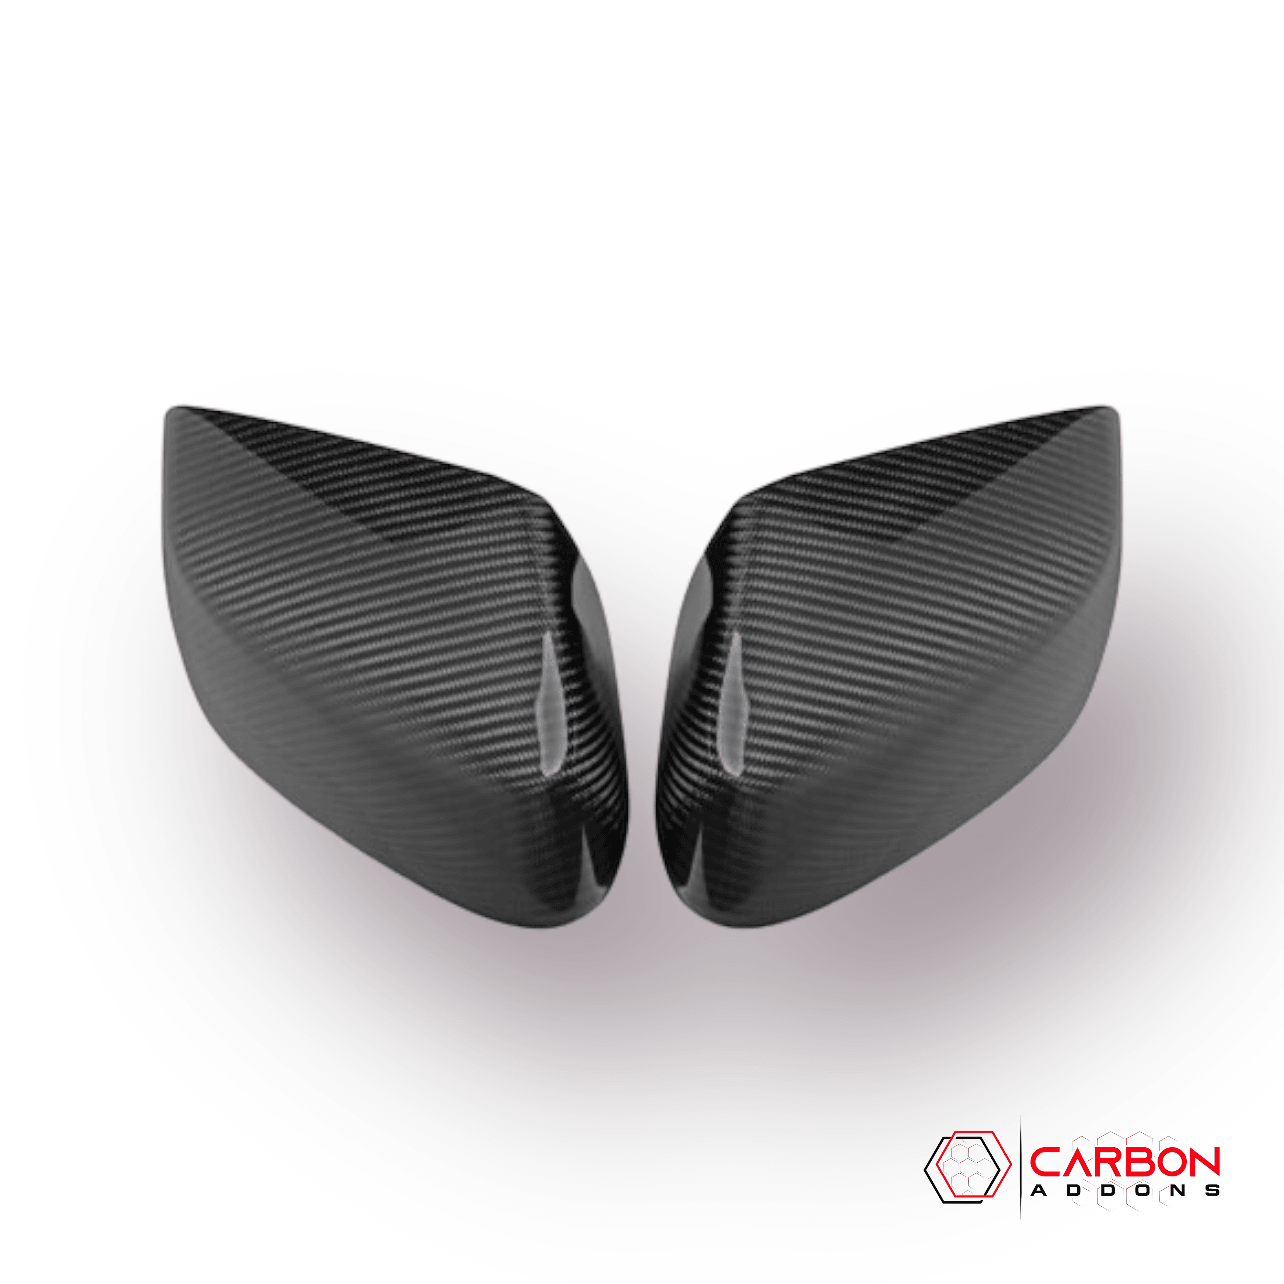 Exterior Carbon Fiber Mirror Covers | 2020-2024 C8 Corvette - Pair - carbonaddons Carbon Fiber Parts, Accessories, Upgrades, Mods